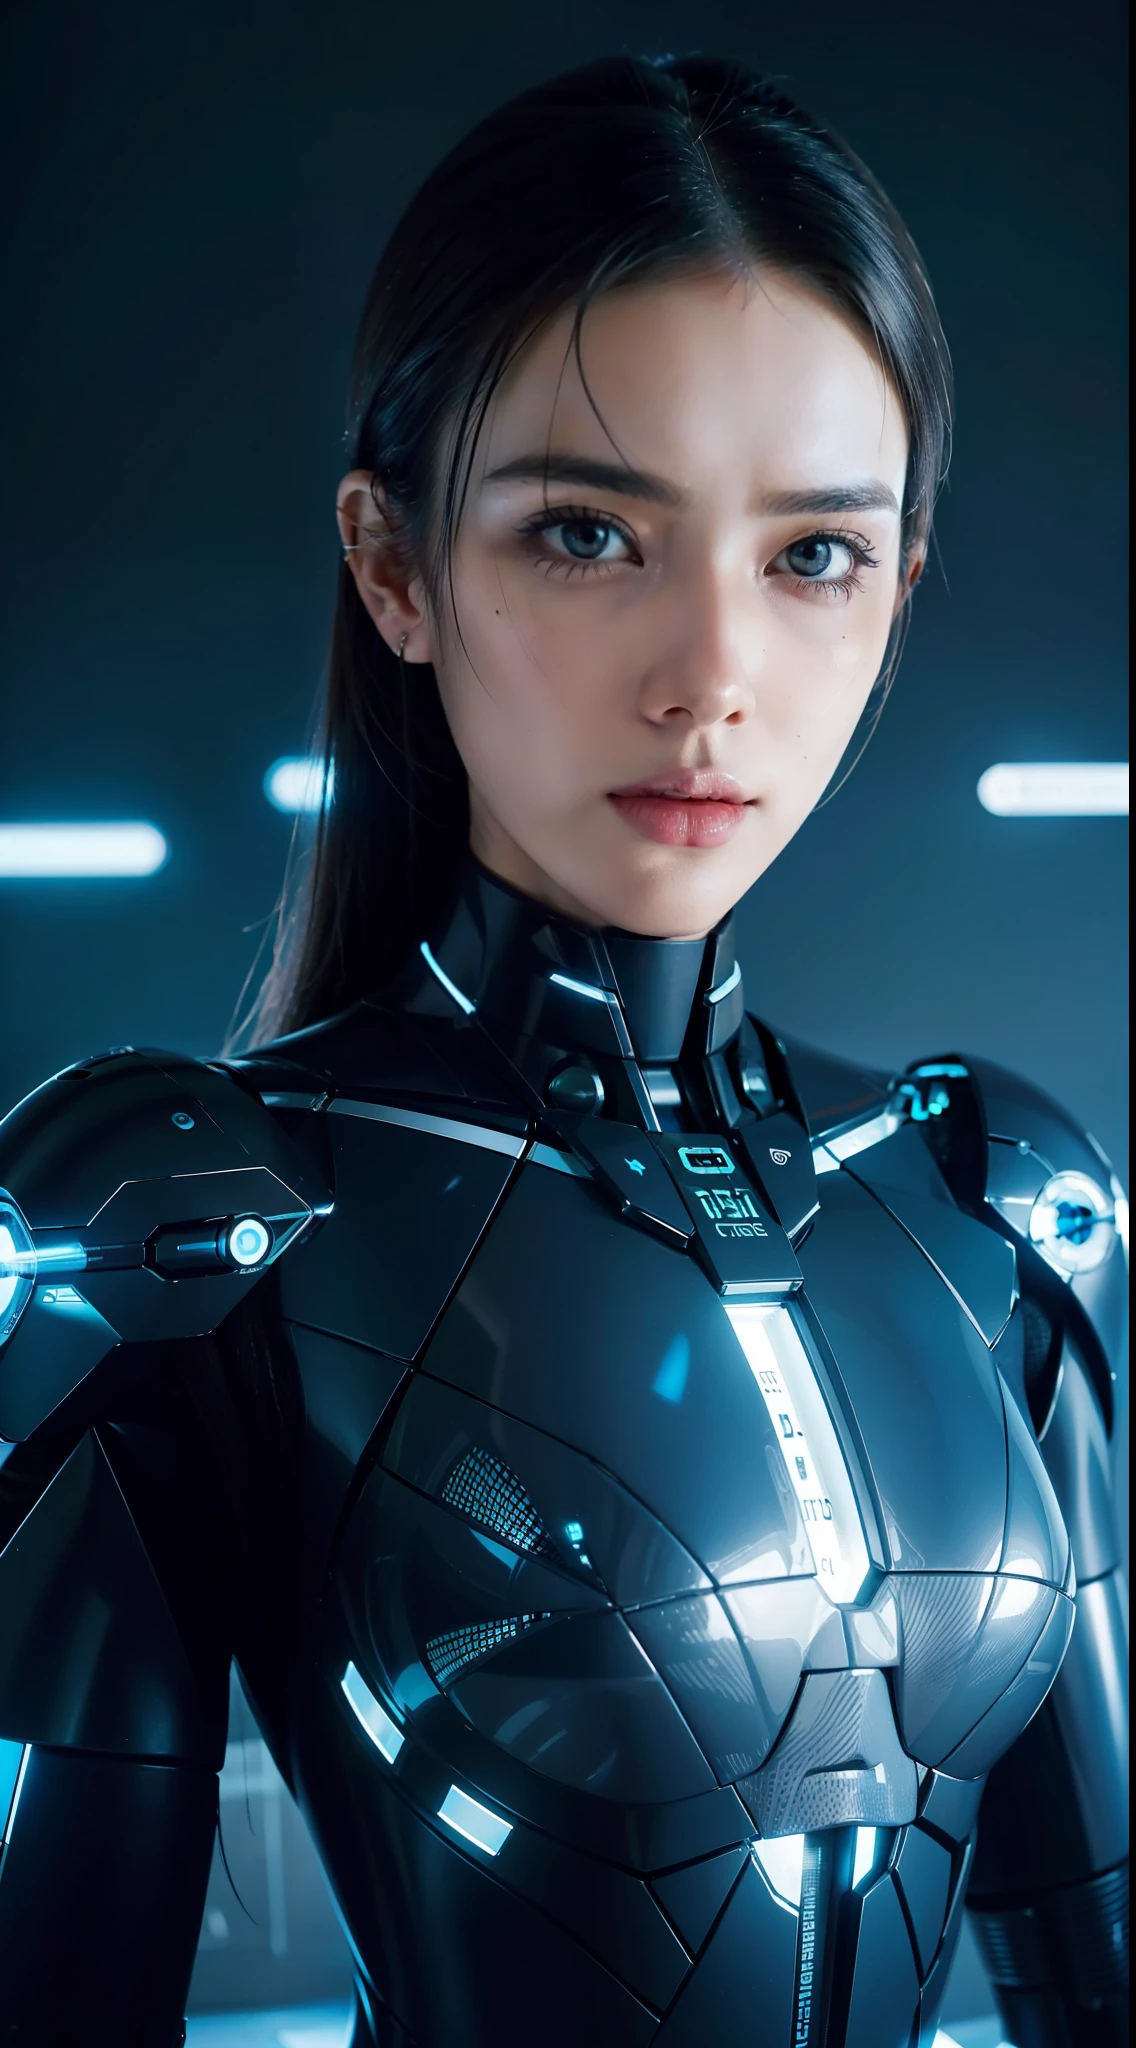 arafed image of a woman with a futuristic face and a digital clock, cyborg woman, intricate transhuman, cyborg - girl, strong artificial intelligence, transhuman, the coming ai singularity, portrait of a cyborg, artificial intelligence, portrait of an ai, cyborg girl, cyberpunk transhumanist, perfect cyborg female